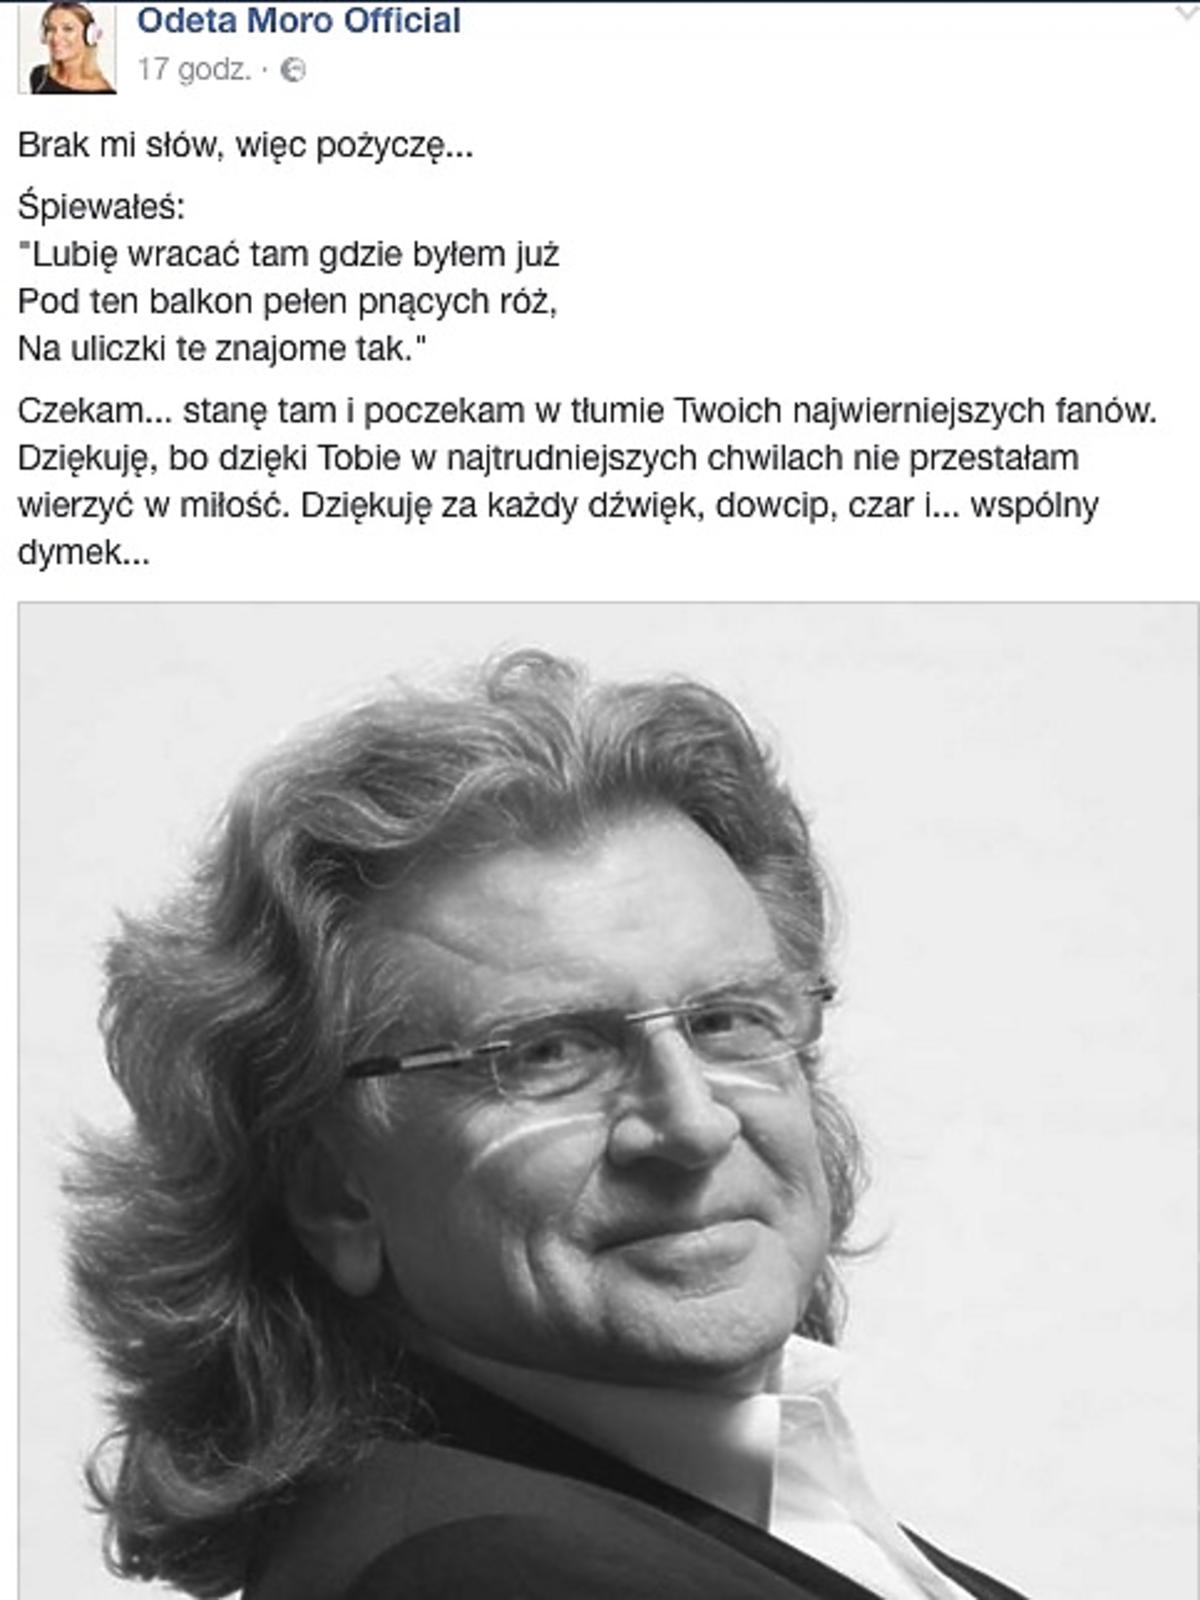 Odeta Moro żegna Zbigniewa Wodeckiego